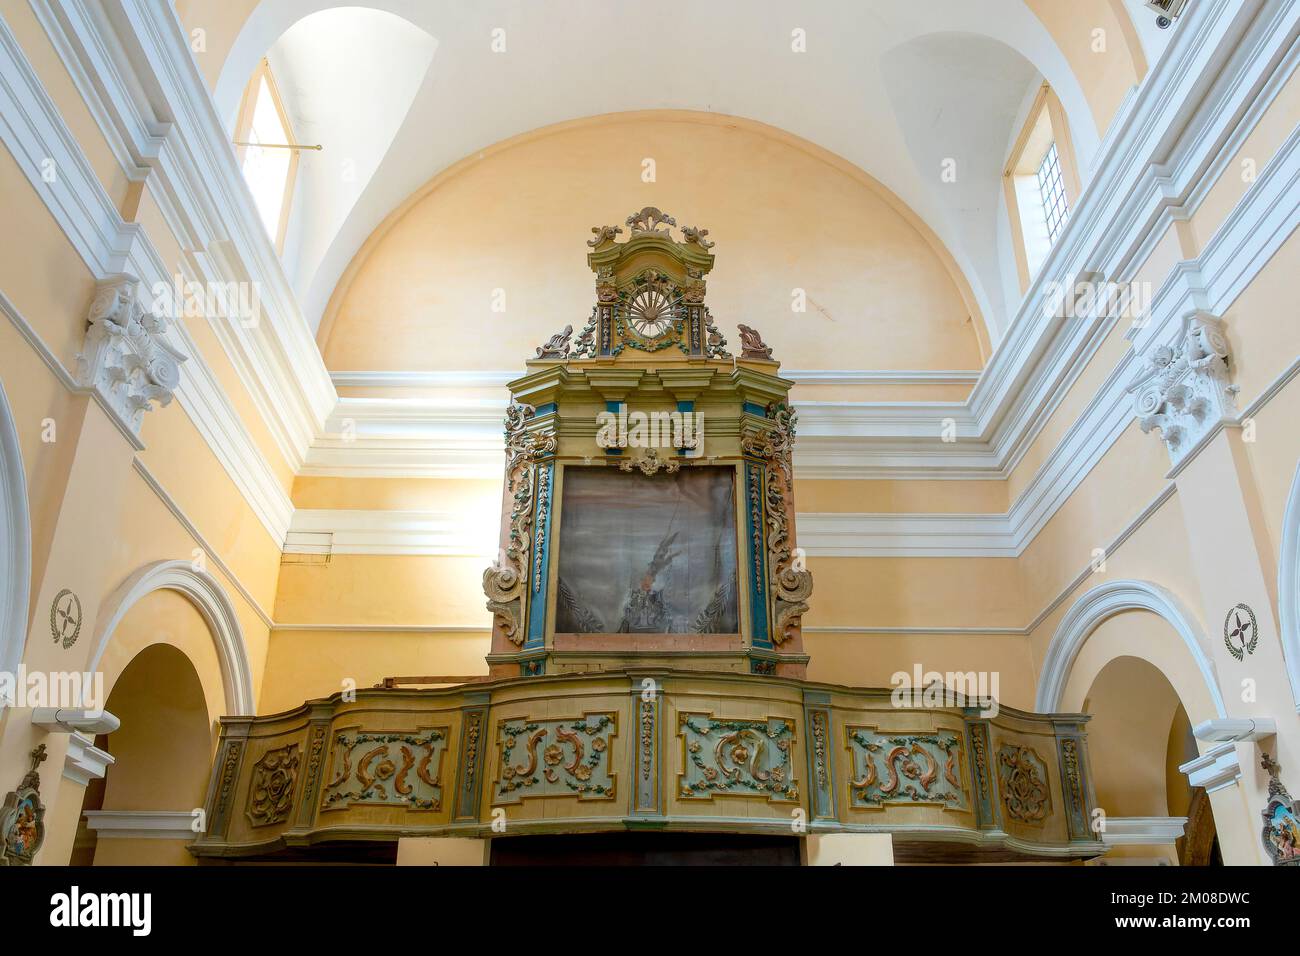 Interior of the Complex of San Pietro Apostolo, Loreto Aprutino, Italy Stock Photo